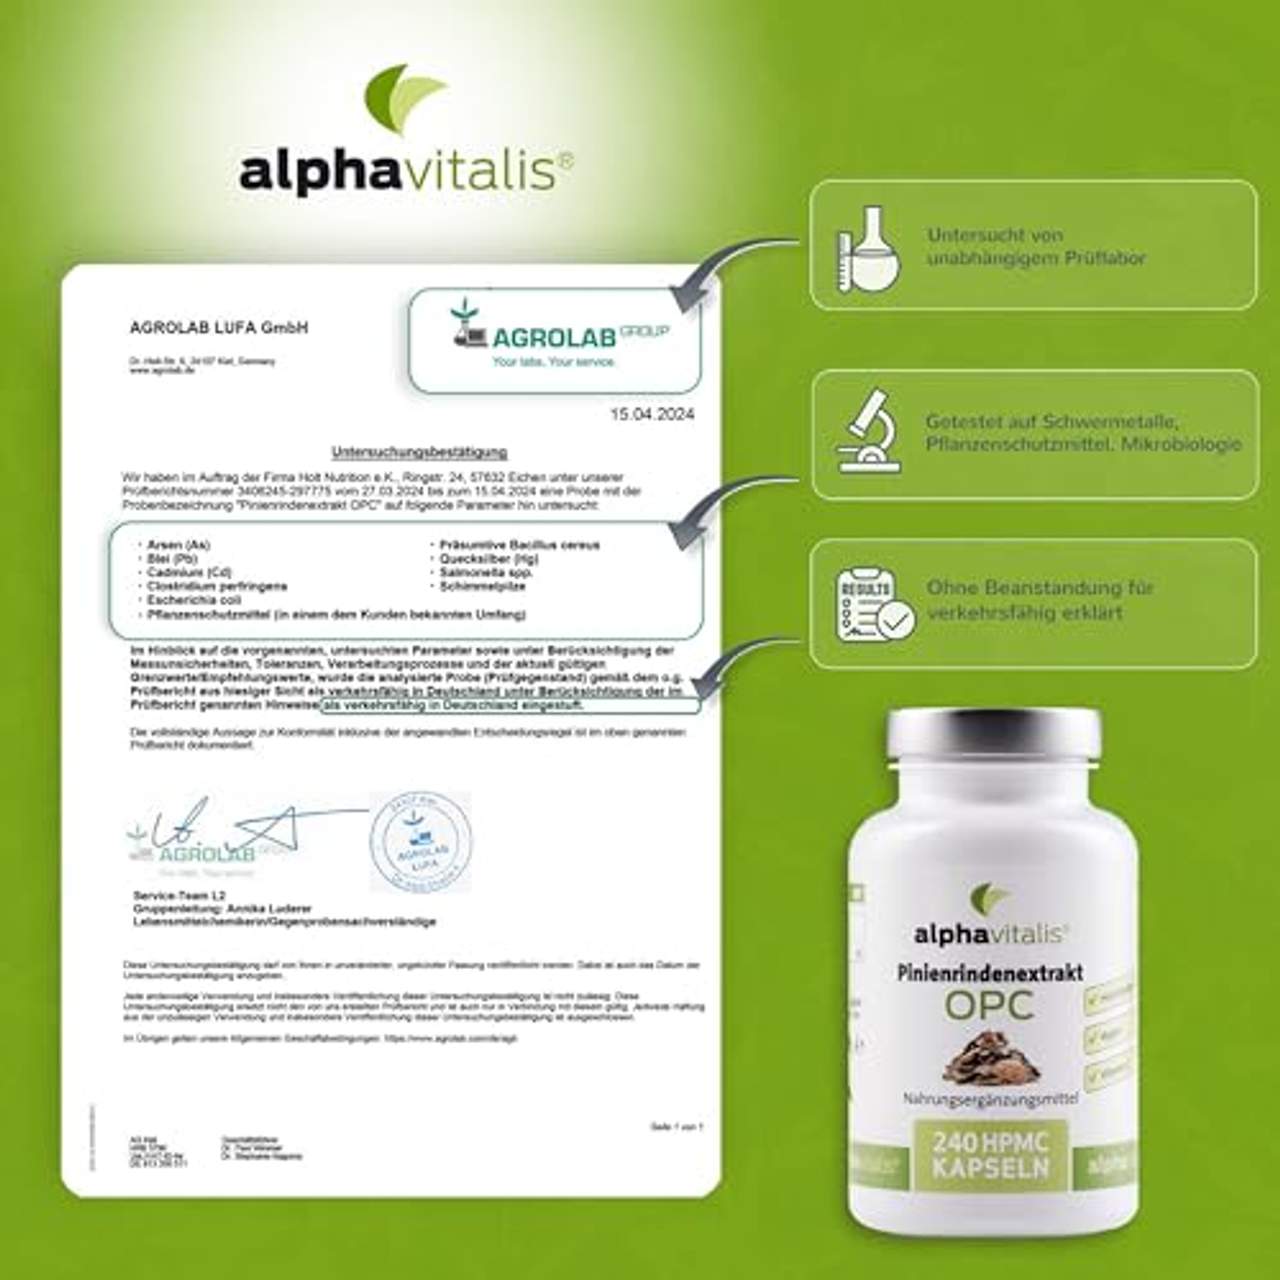 alphavitalis 500 mg Pinienrindenextrakt